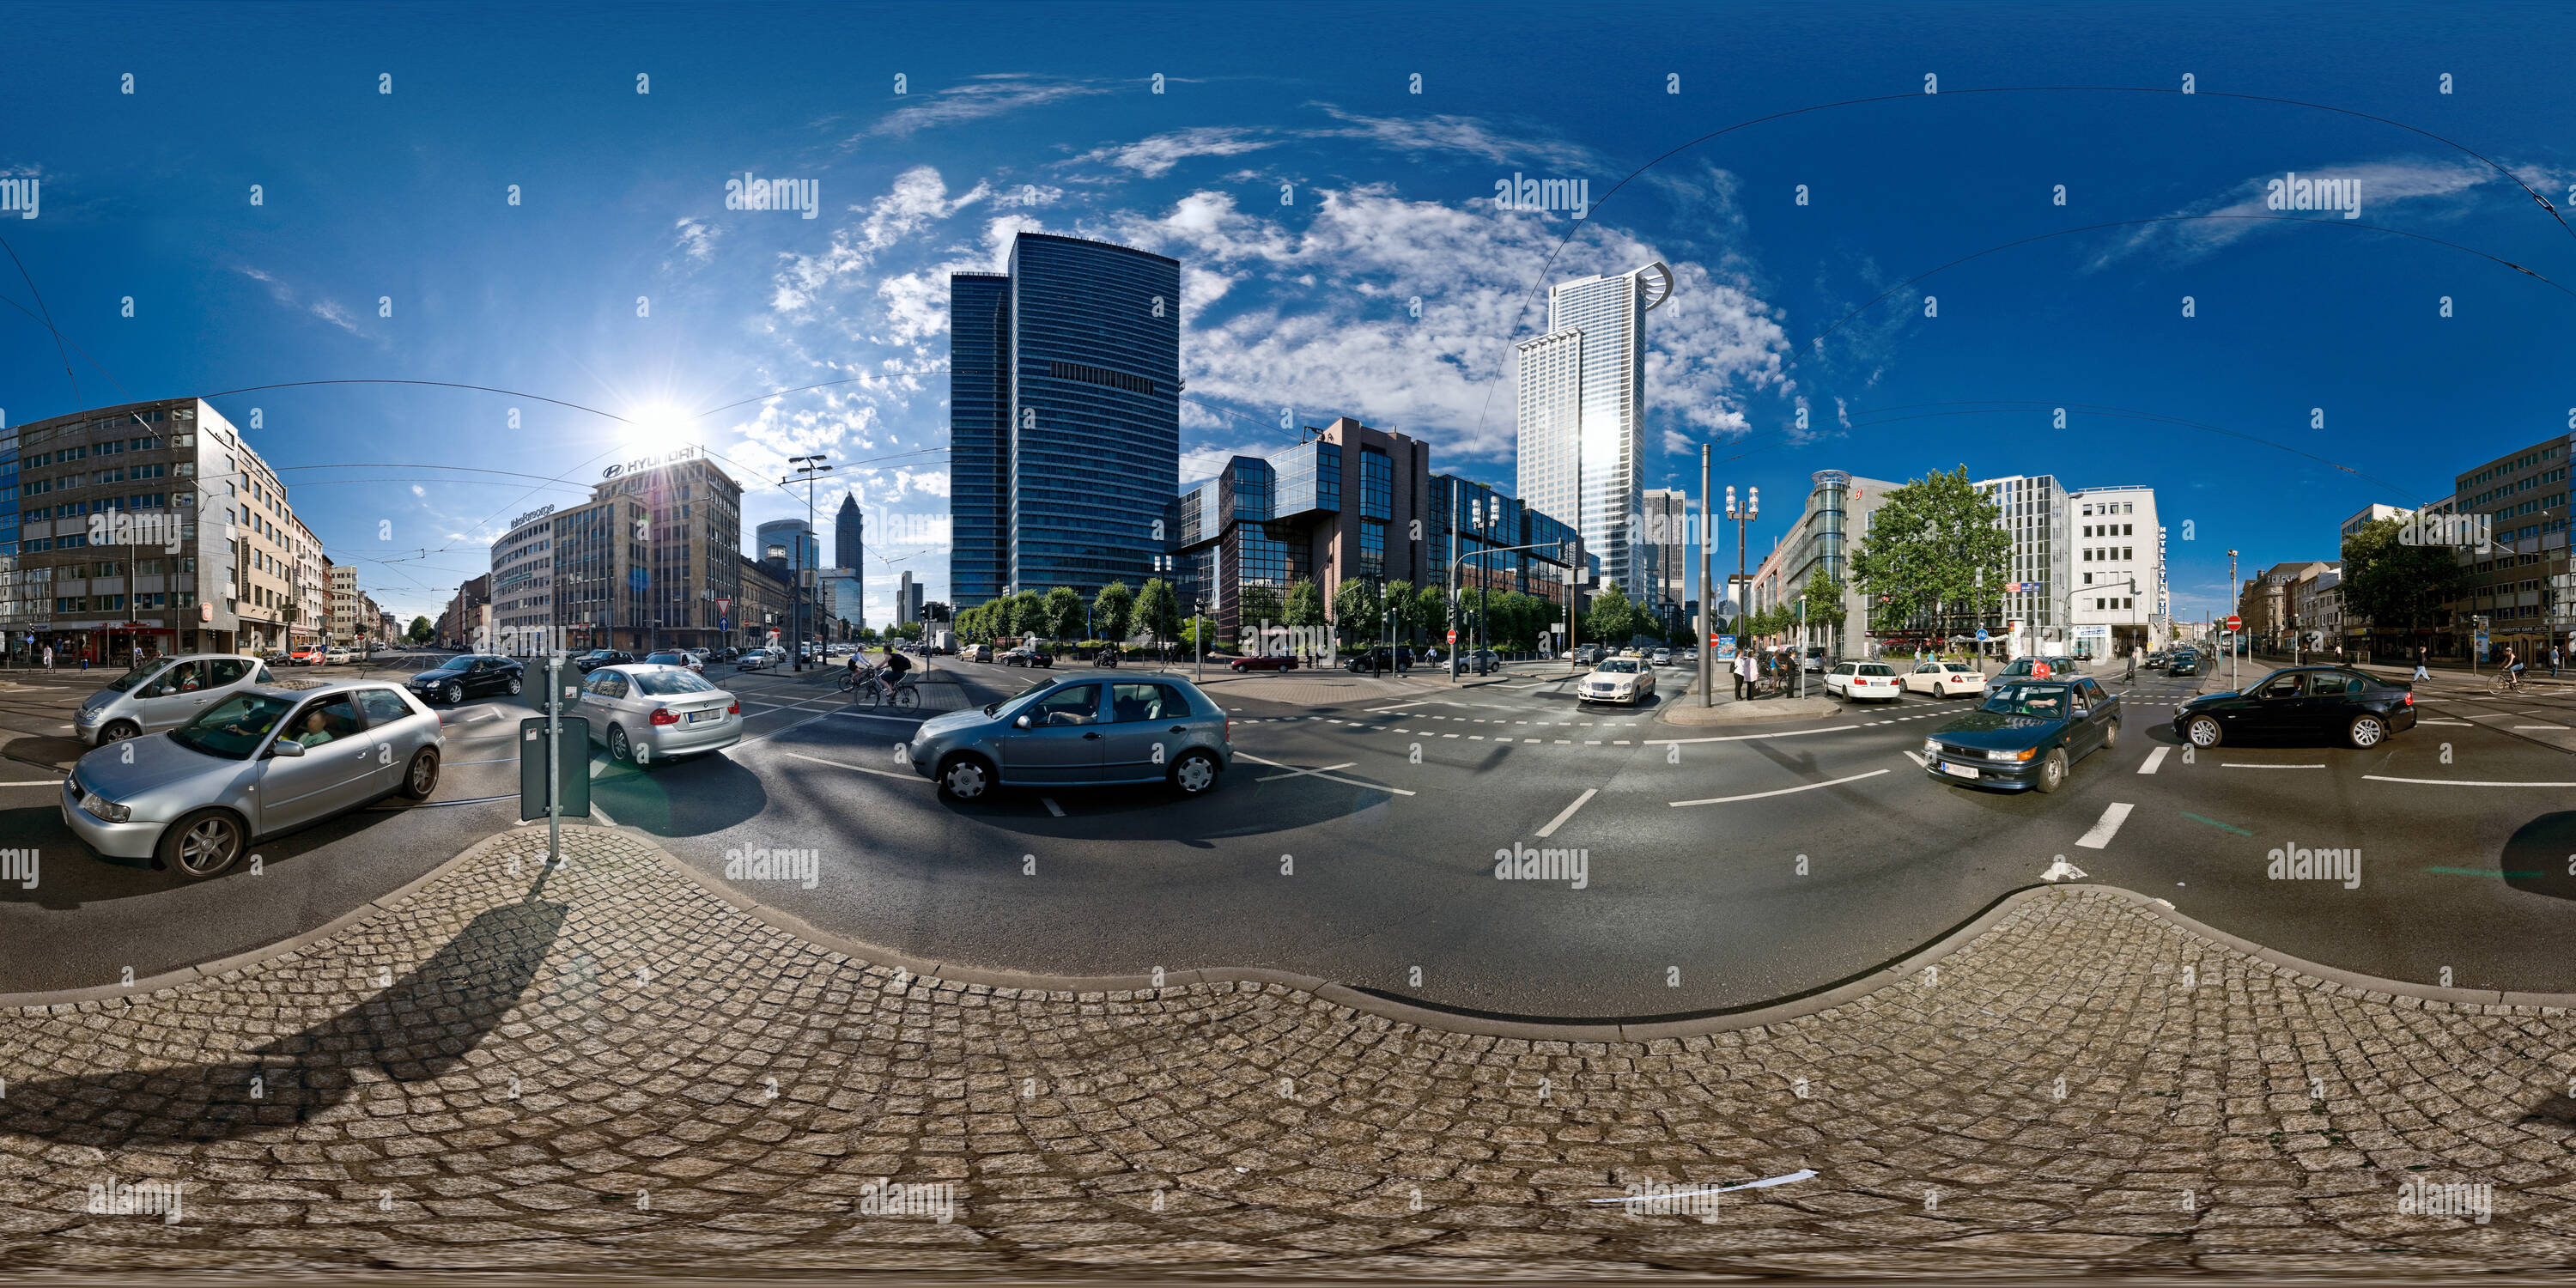 360 degree panoramic view of Platz der Republik